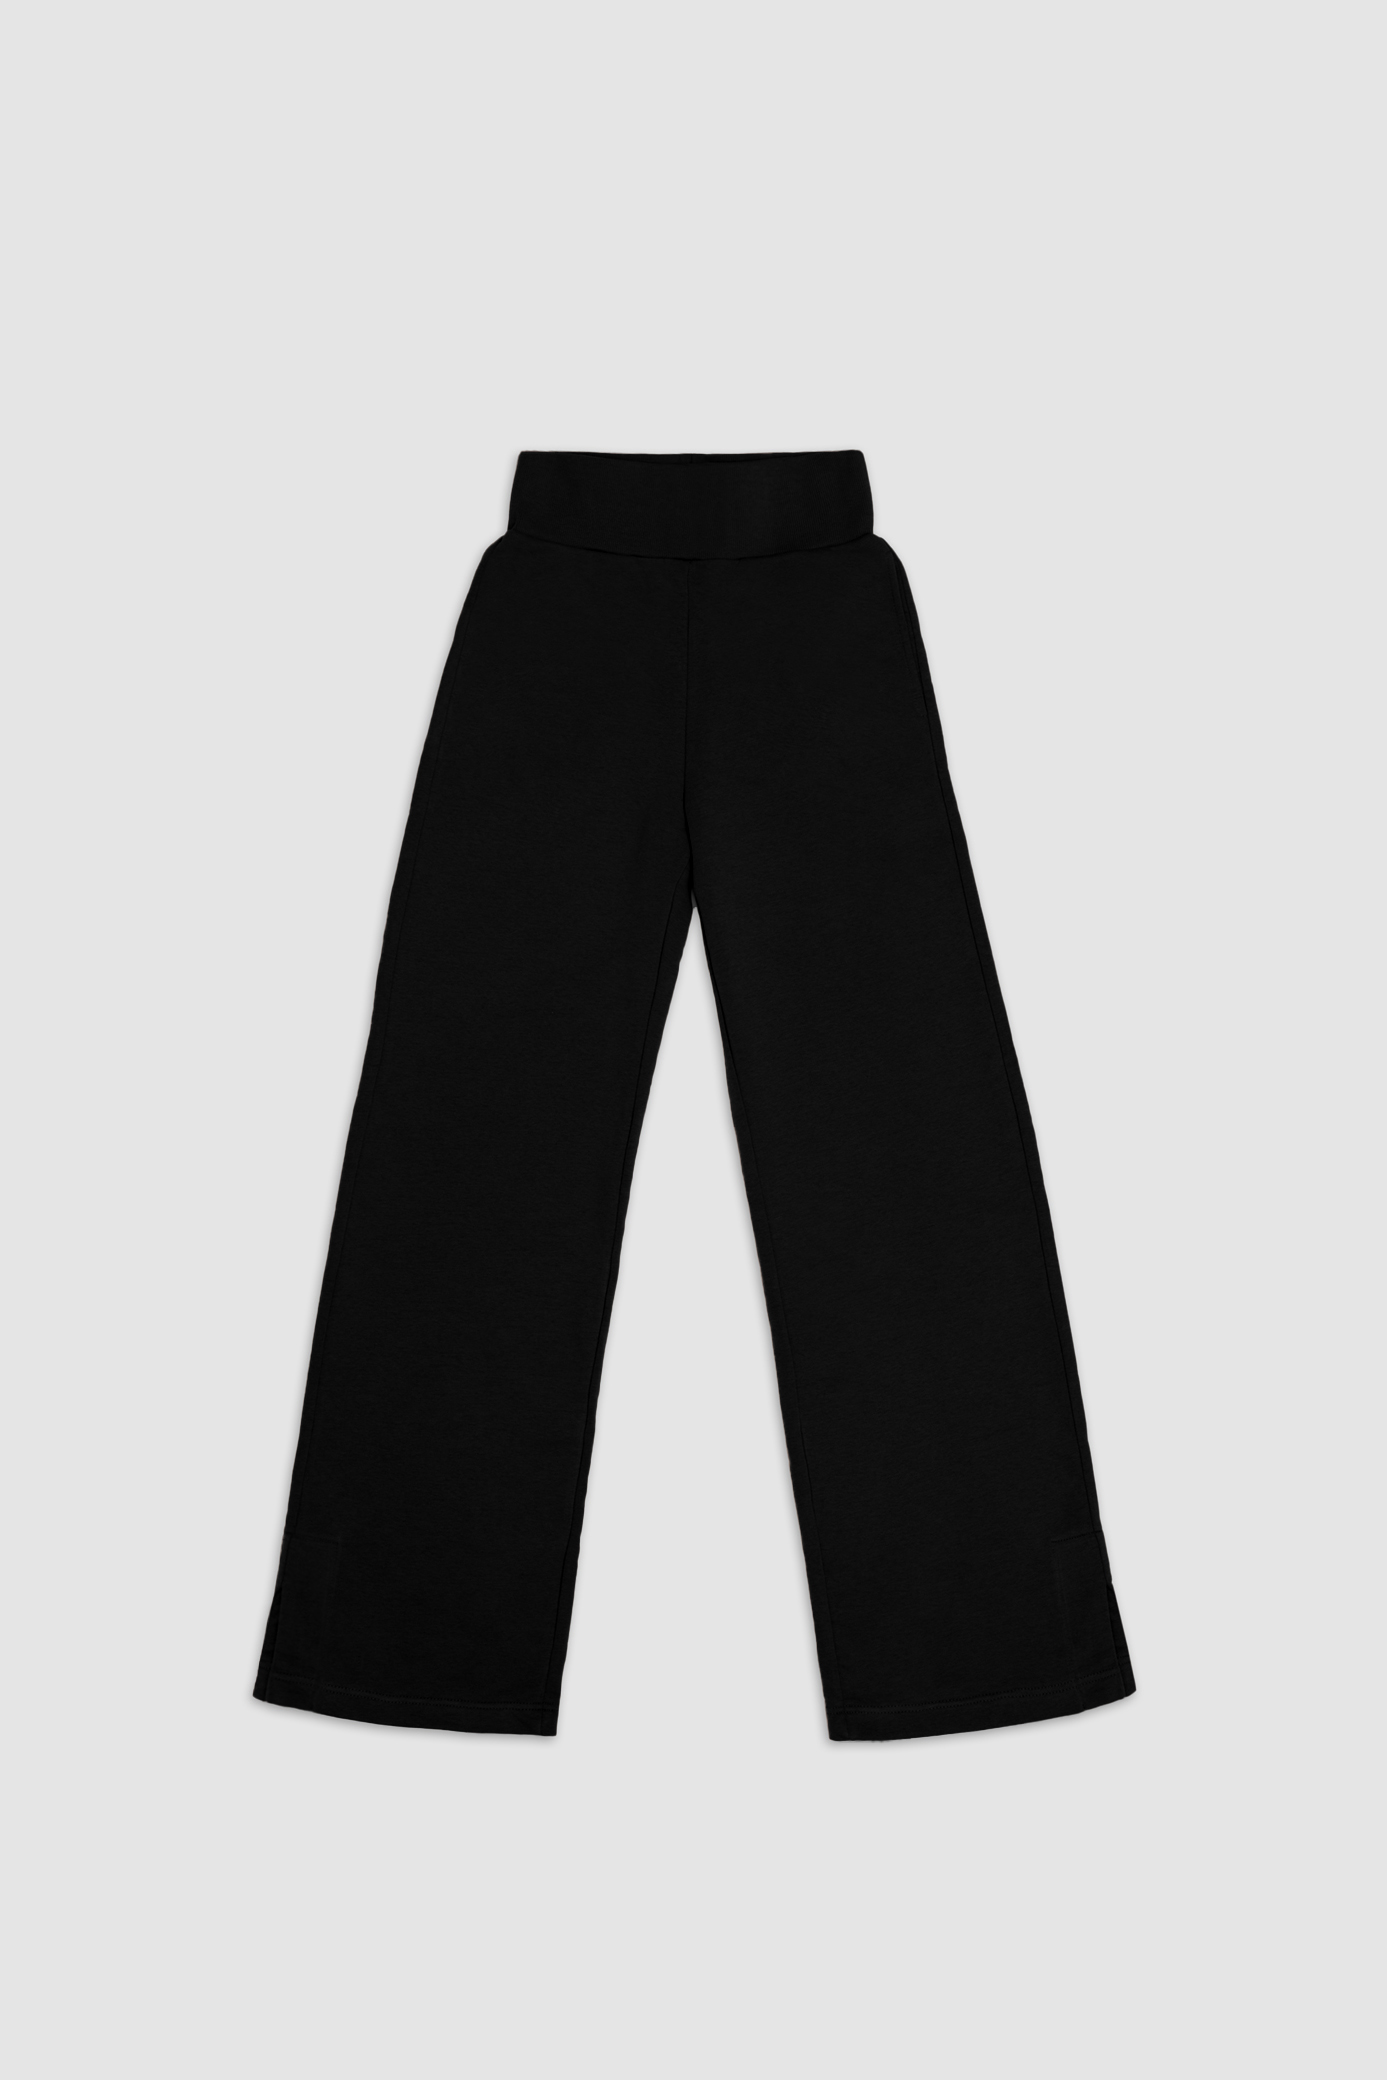 Spodnie Fin Cotton Przod Black